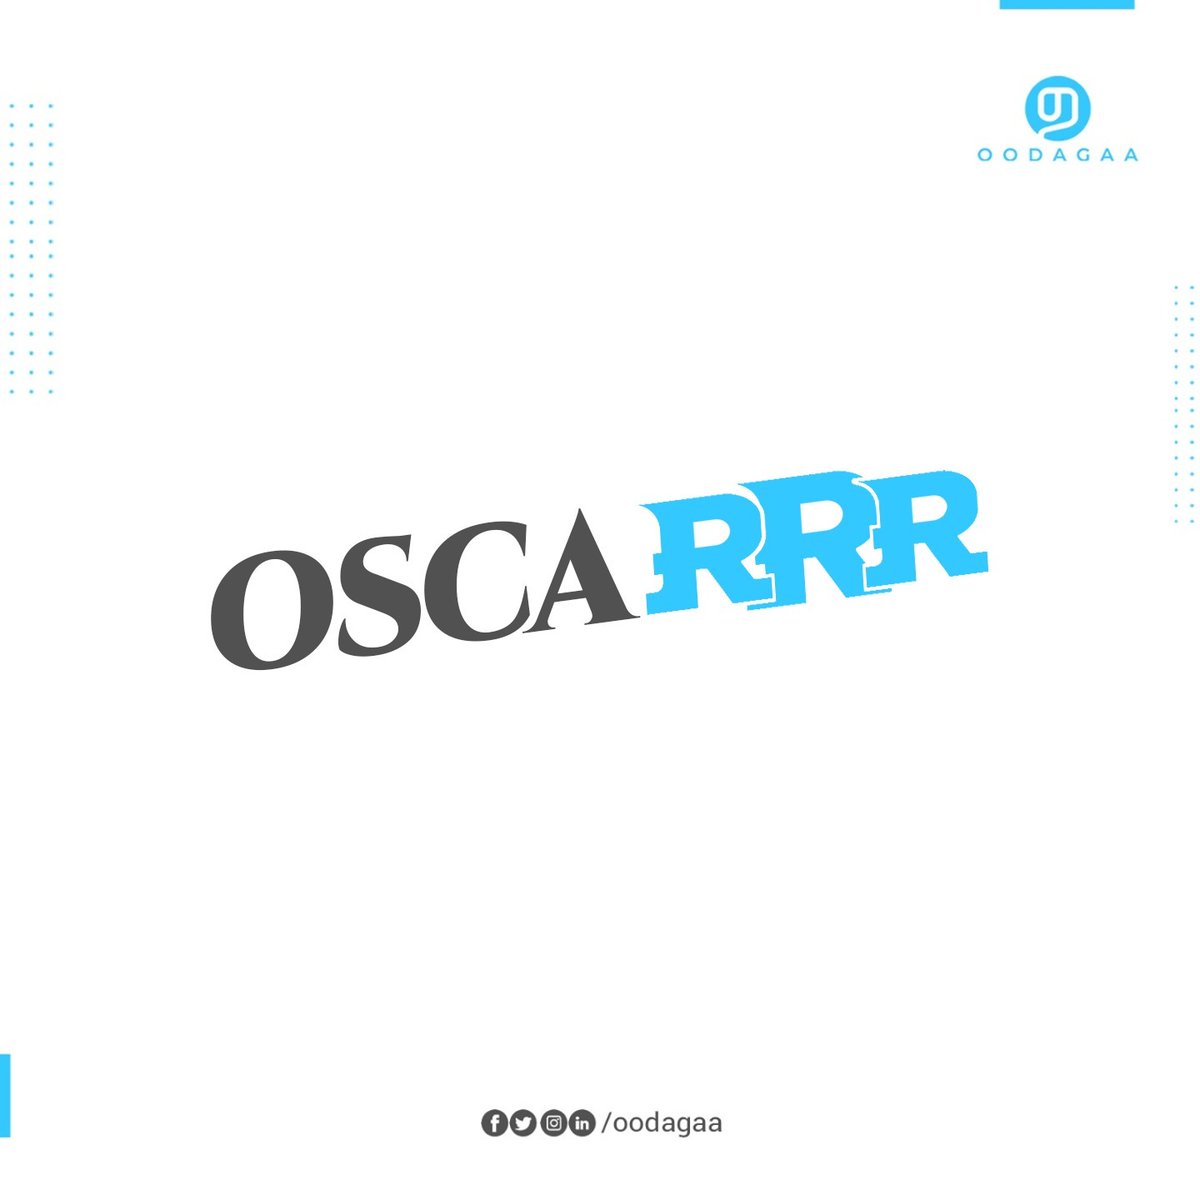 RRR has conquered the OscaRRR! Congratulations to the cast and crew on this legendary win. @mmkeeravaani @boselyricist @ssrajamouli #RRR #Oscar #Oscar2023 @RRRMovie #NaatuNaatu